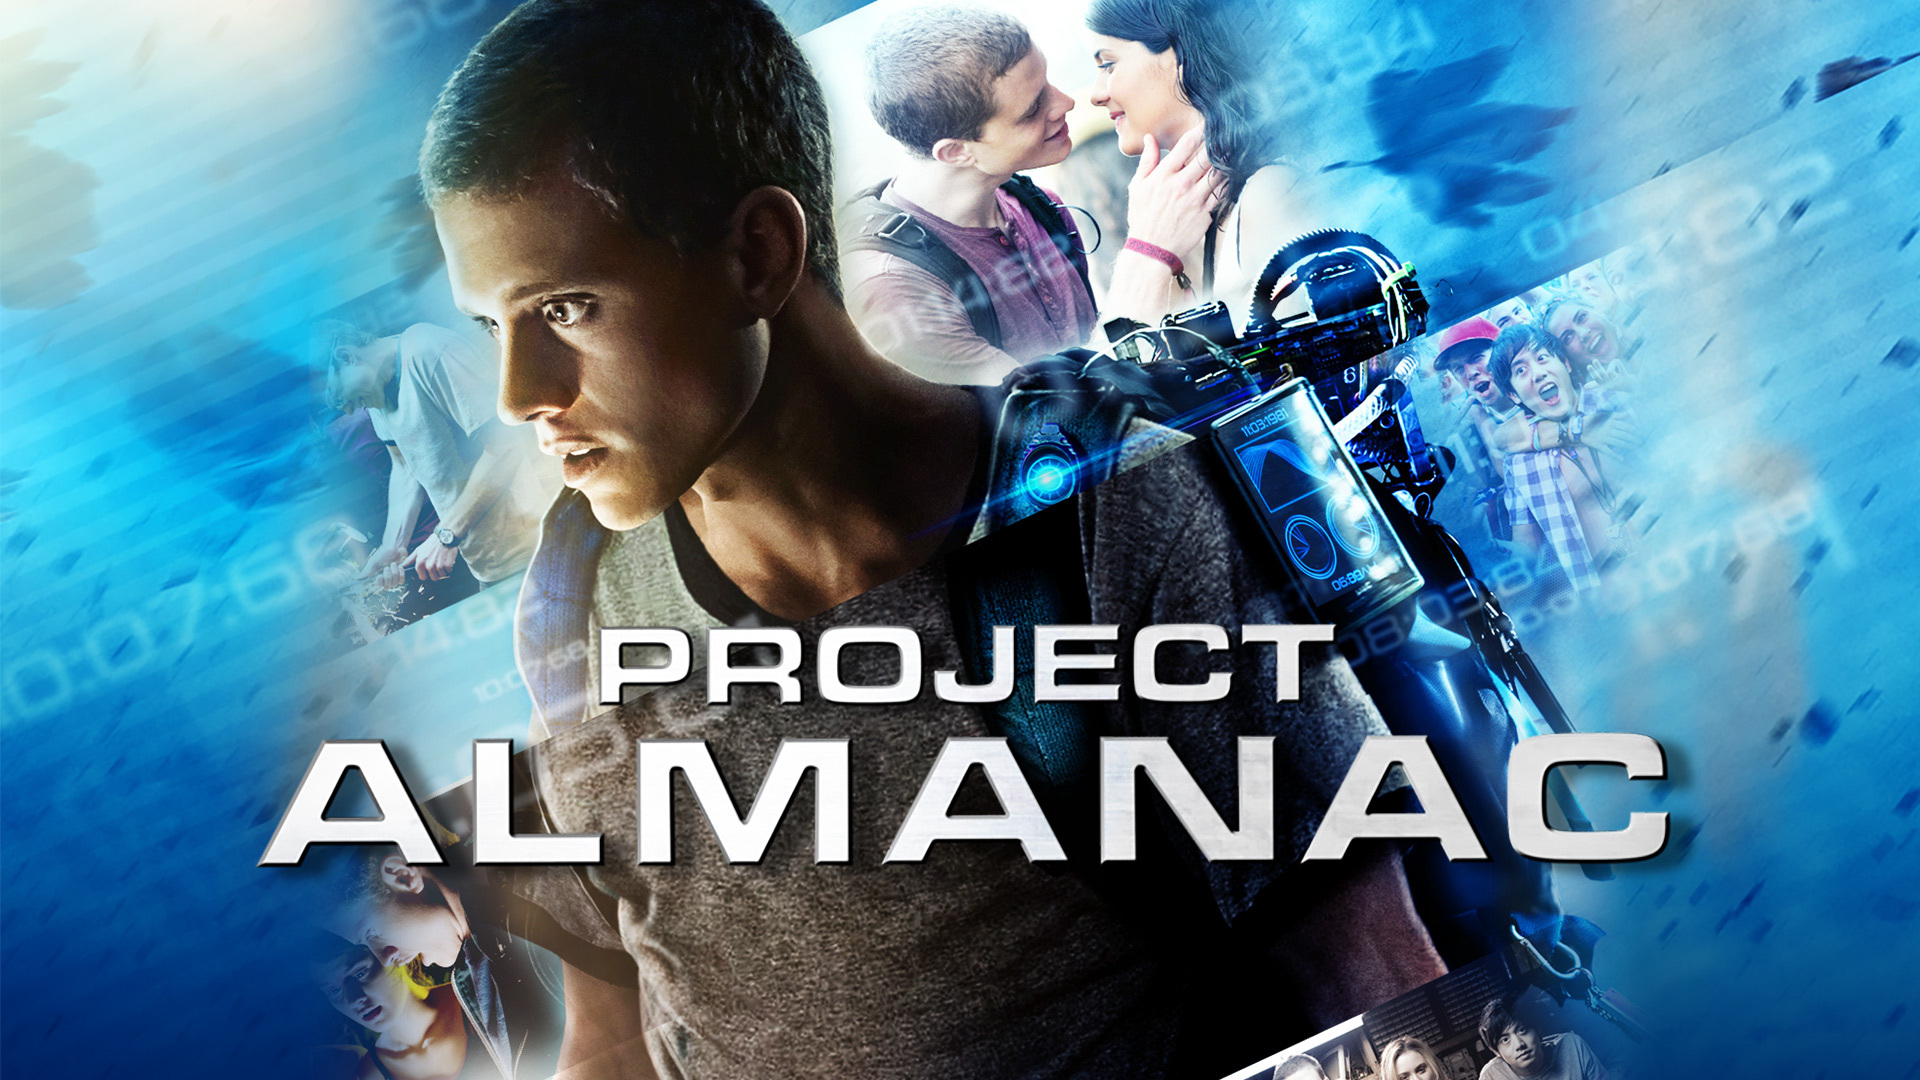 Project Almanac Watch Full Movie On Paramount Plus